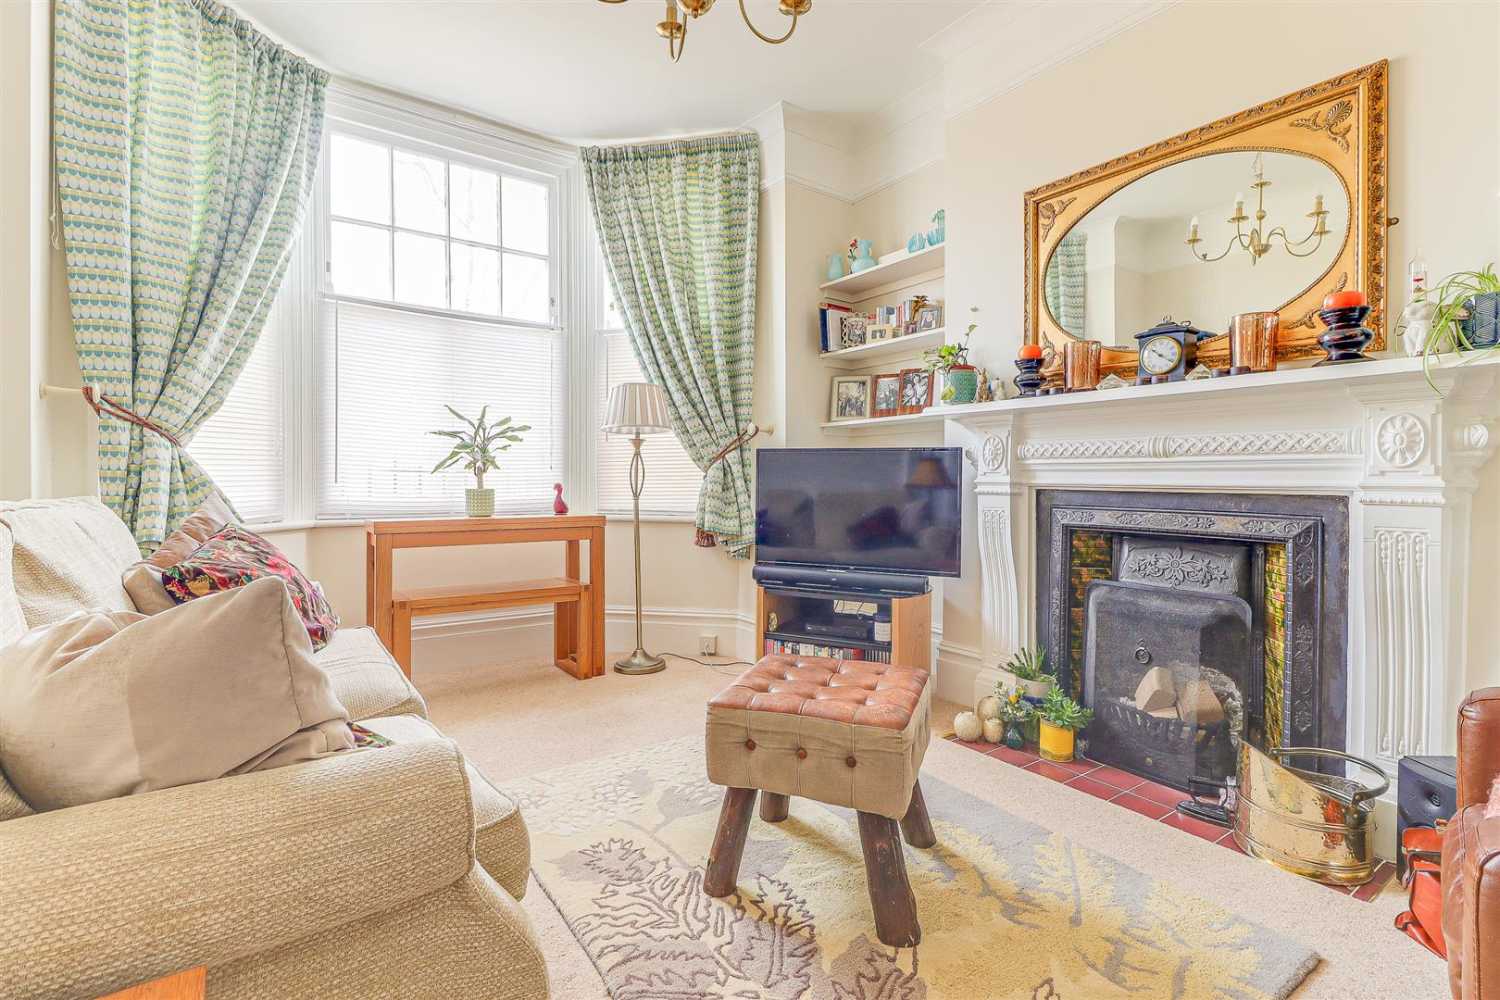 One-bed flat, Westcliff-on-Sea, Essex, £240,000 - interior